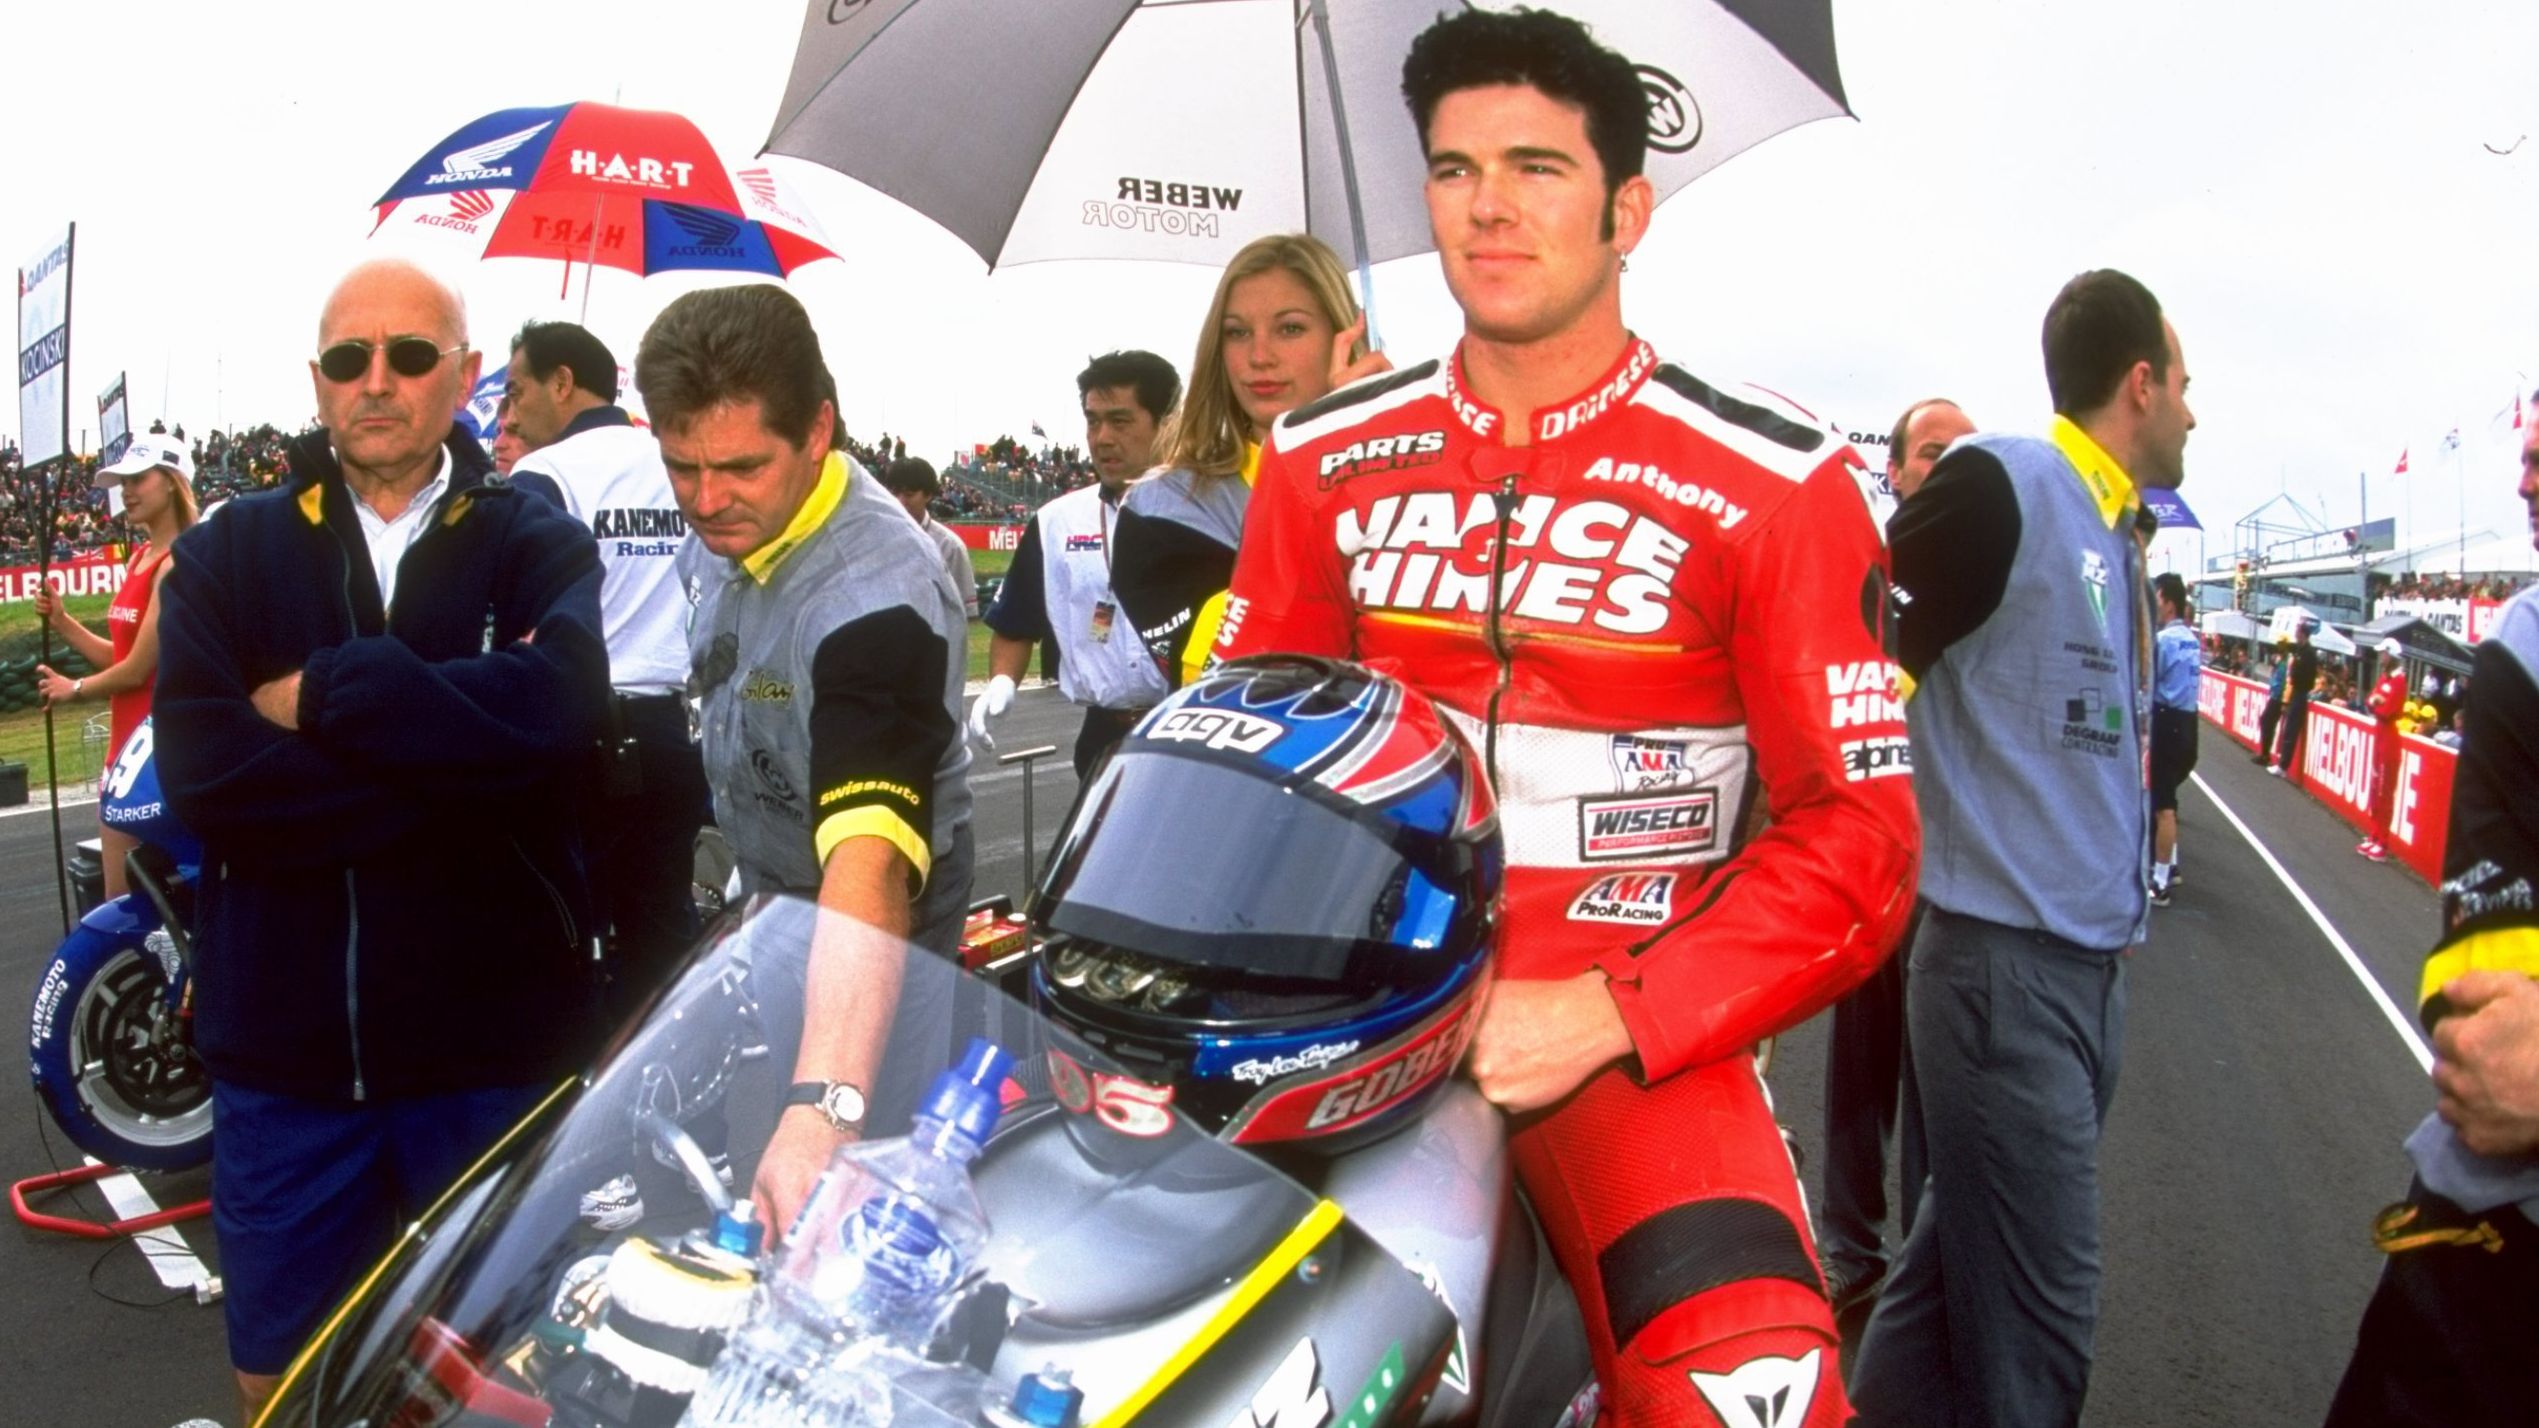 'Ride in peace': Former Australian Moto GP rider Anthony Gobert dies aged 48